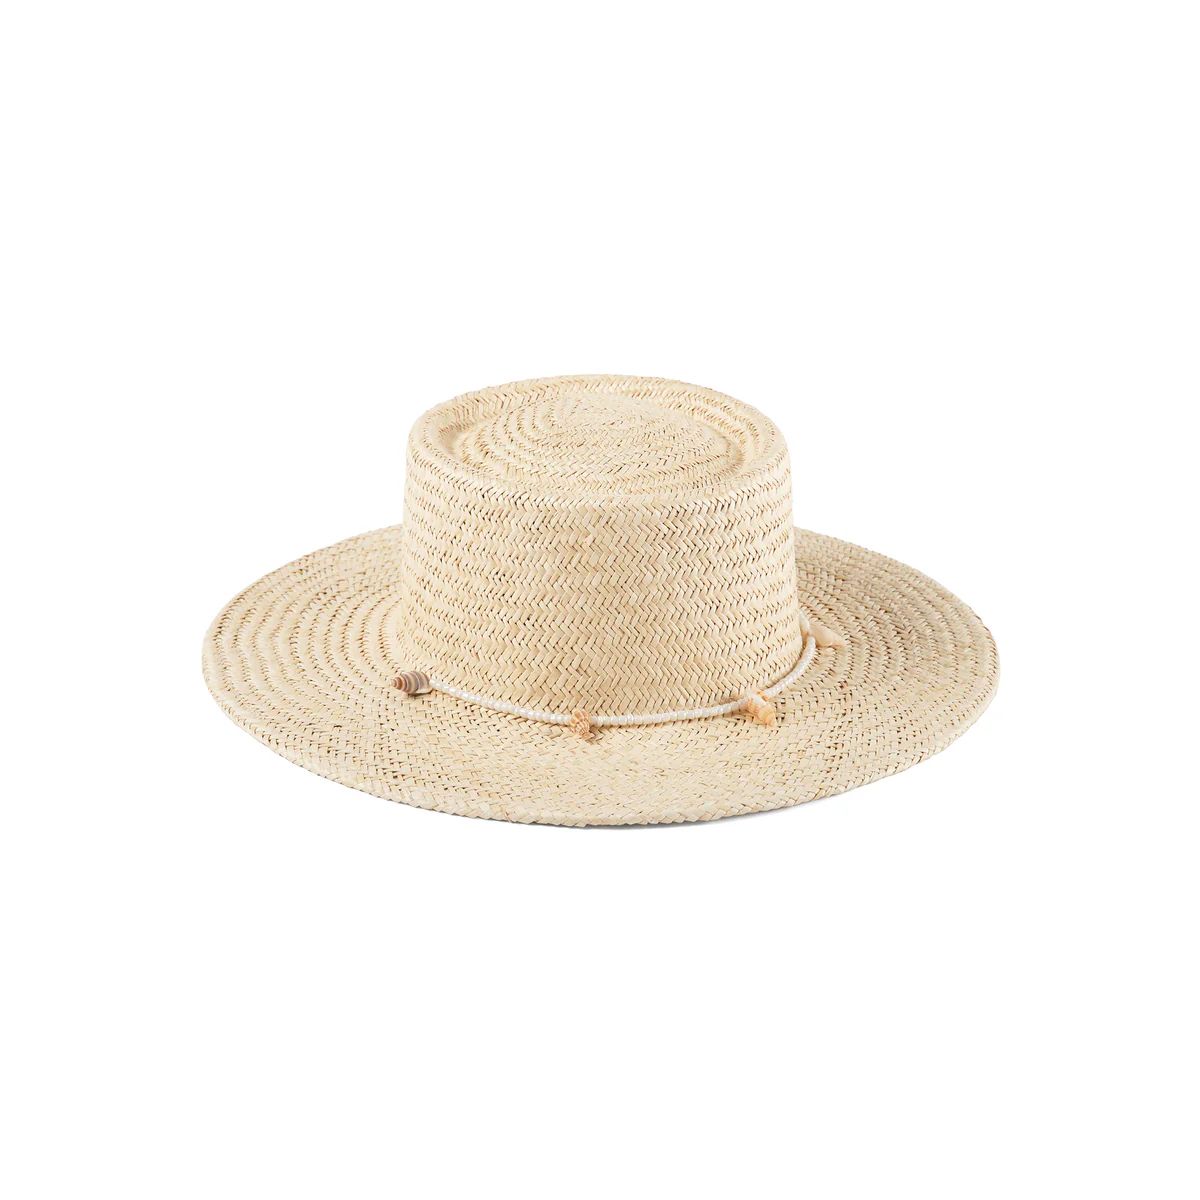 Seashells Boater - Straw Boater Hat in Natural | Lack of Color US | Lack of Color US